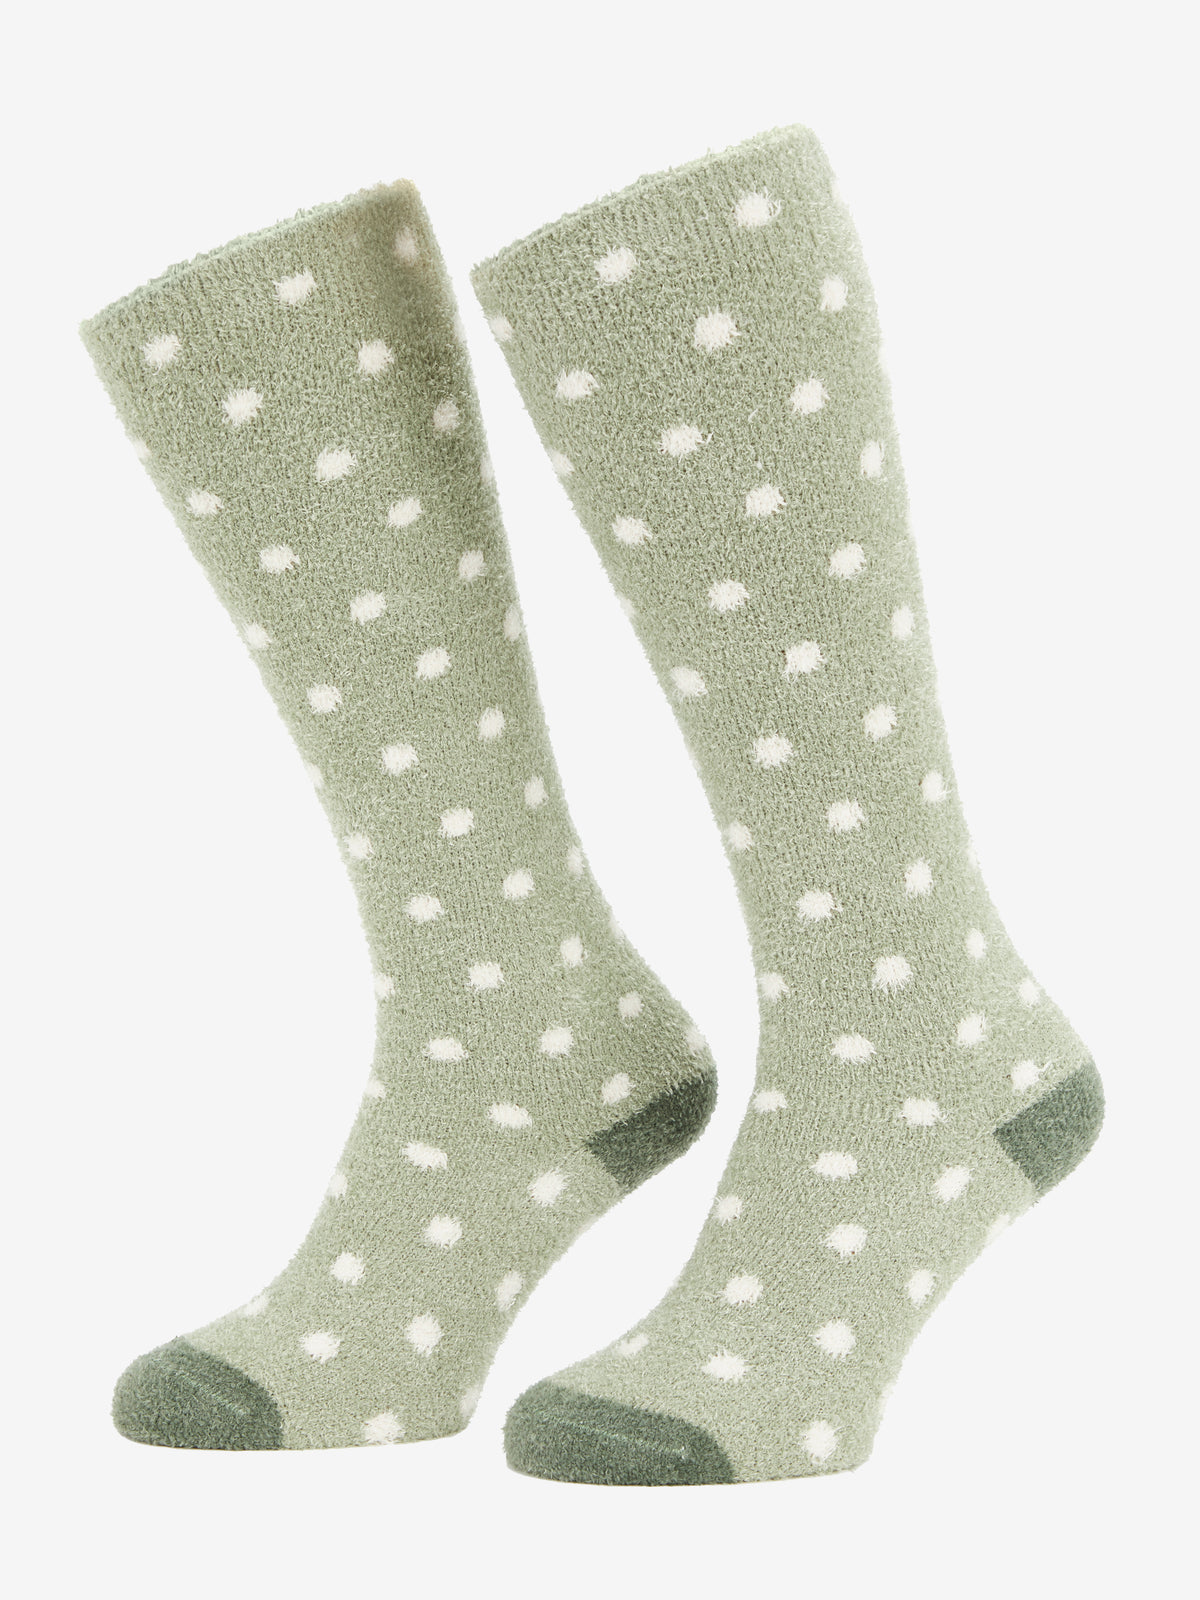 LeMieux Sally Spot Fluffies Socks